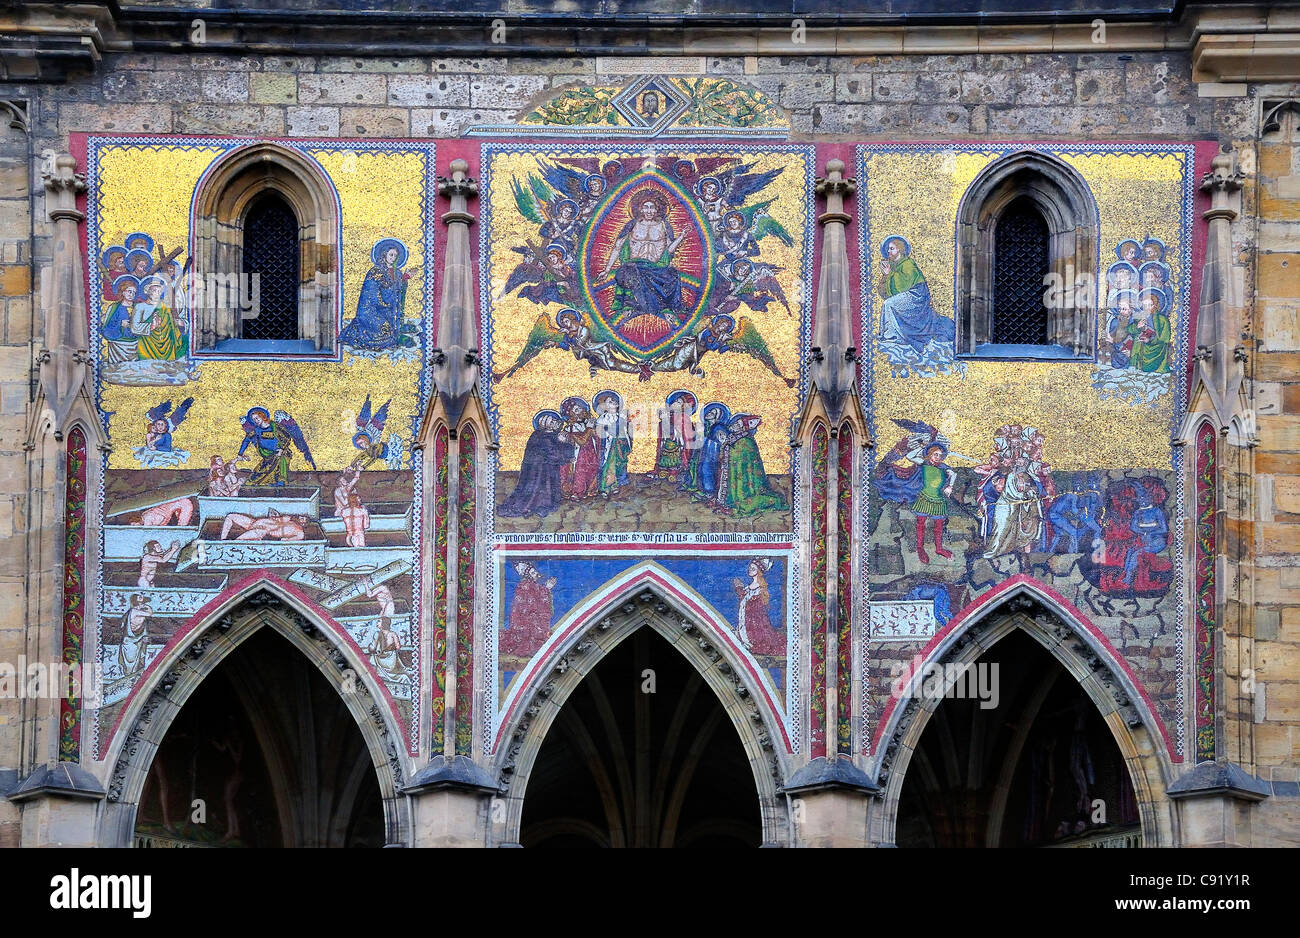 Prag, Tschechische Republik. St. Vitus Kathedrale / Katedrala Svateho Vita. Goldenen Portal mit Mosaik des jüngsten Gerichts (14thC) Stockfoto